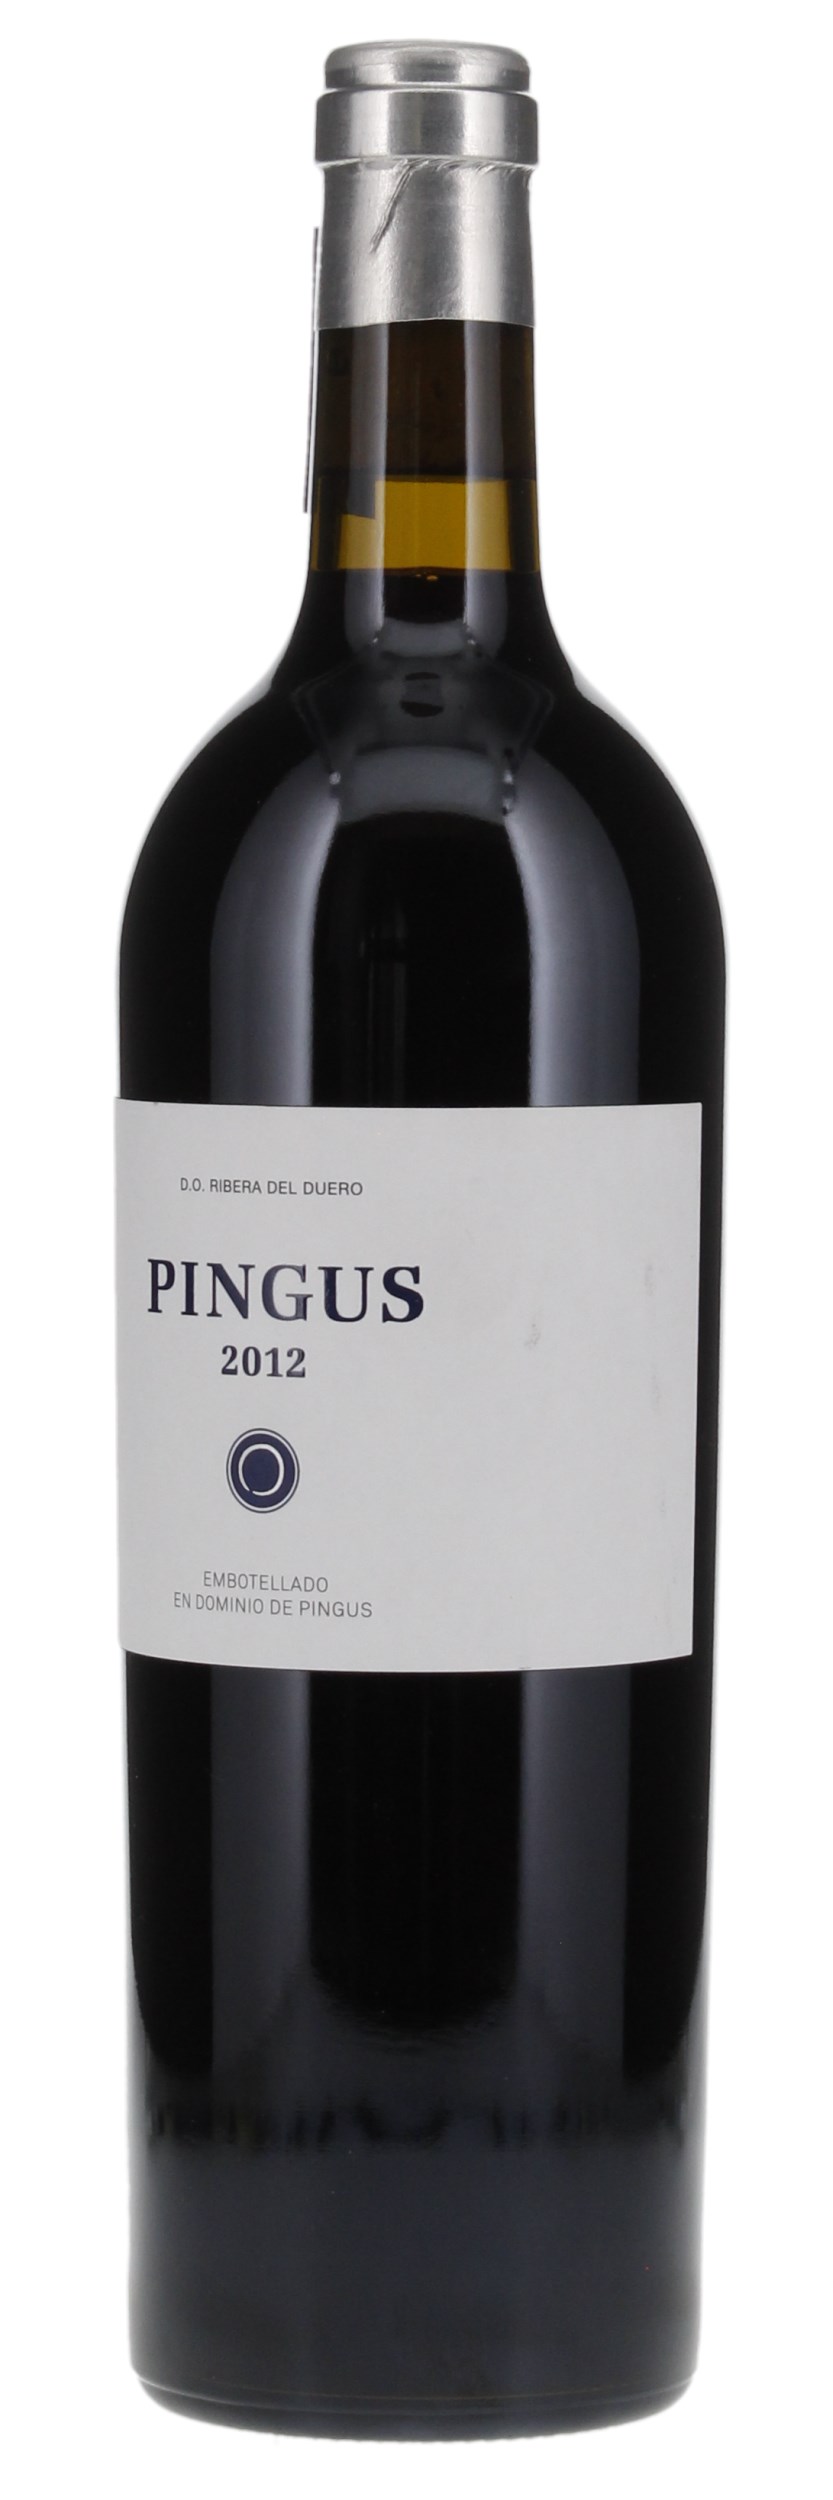 2012 Dominio de Pingus "Pingus", 750ml